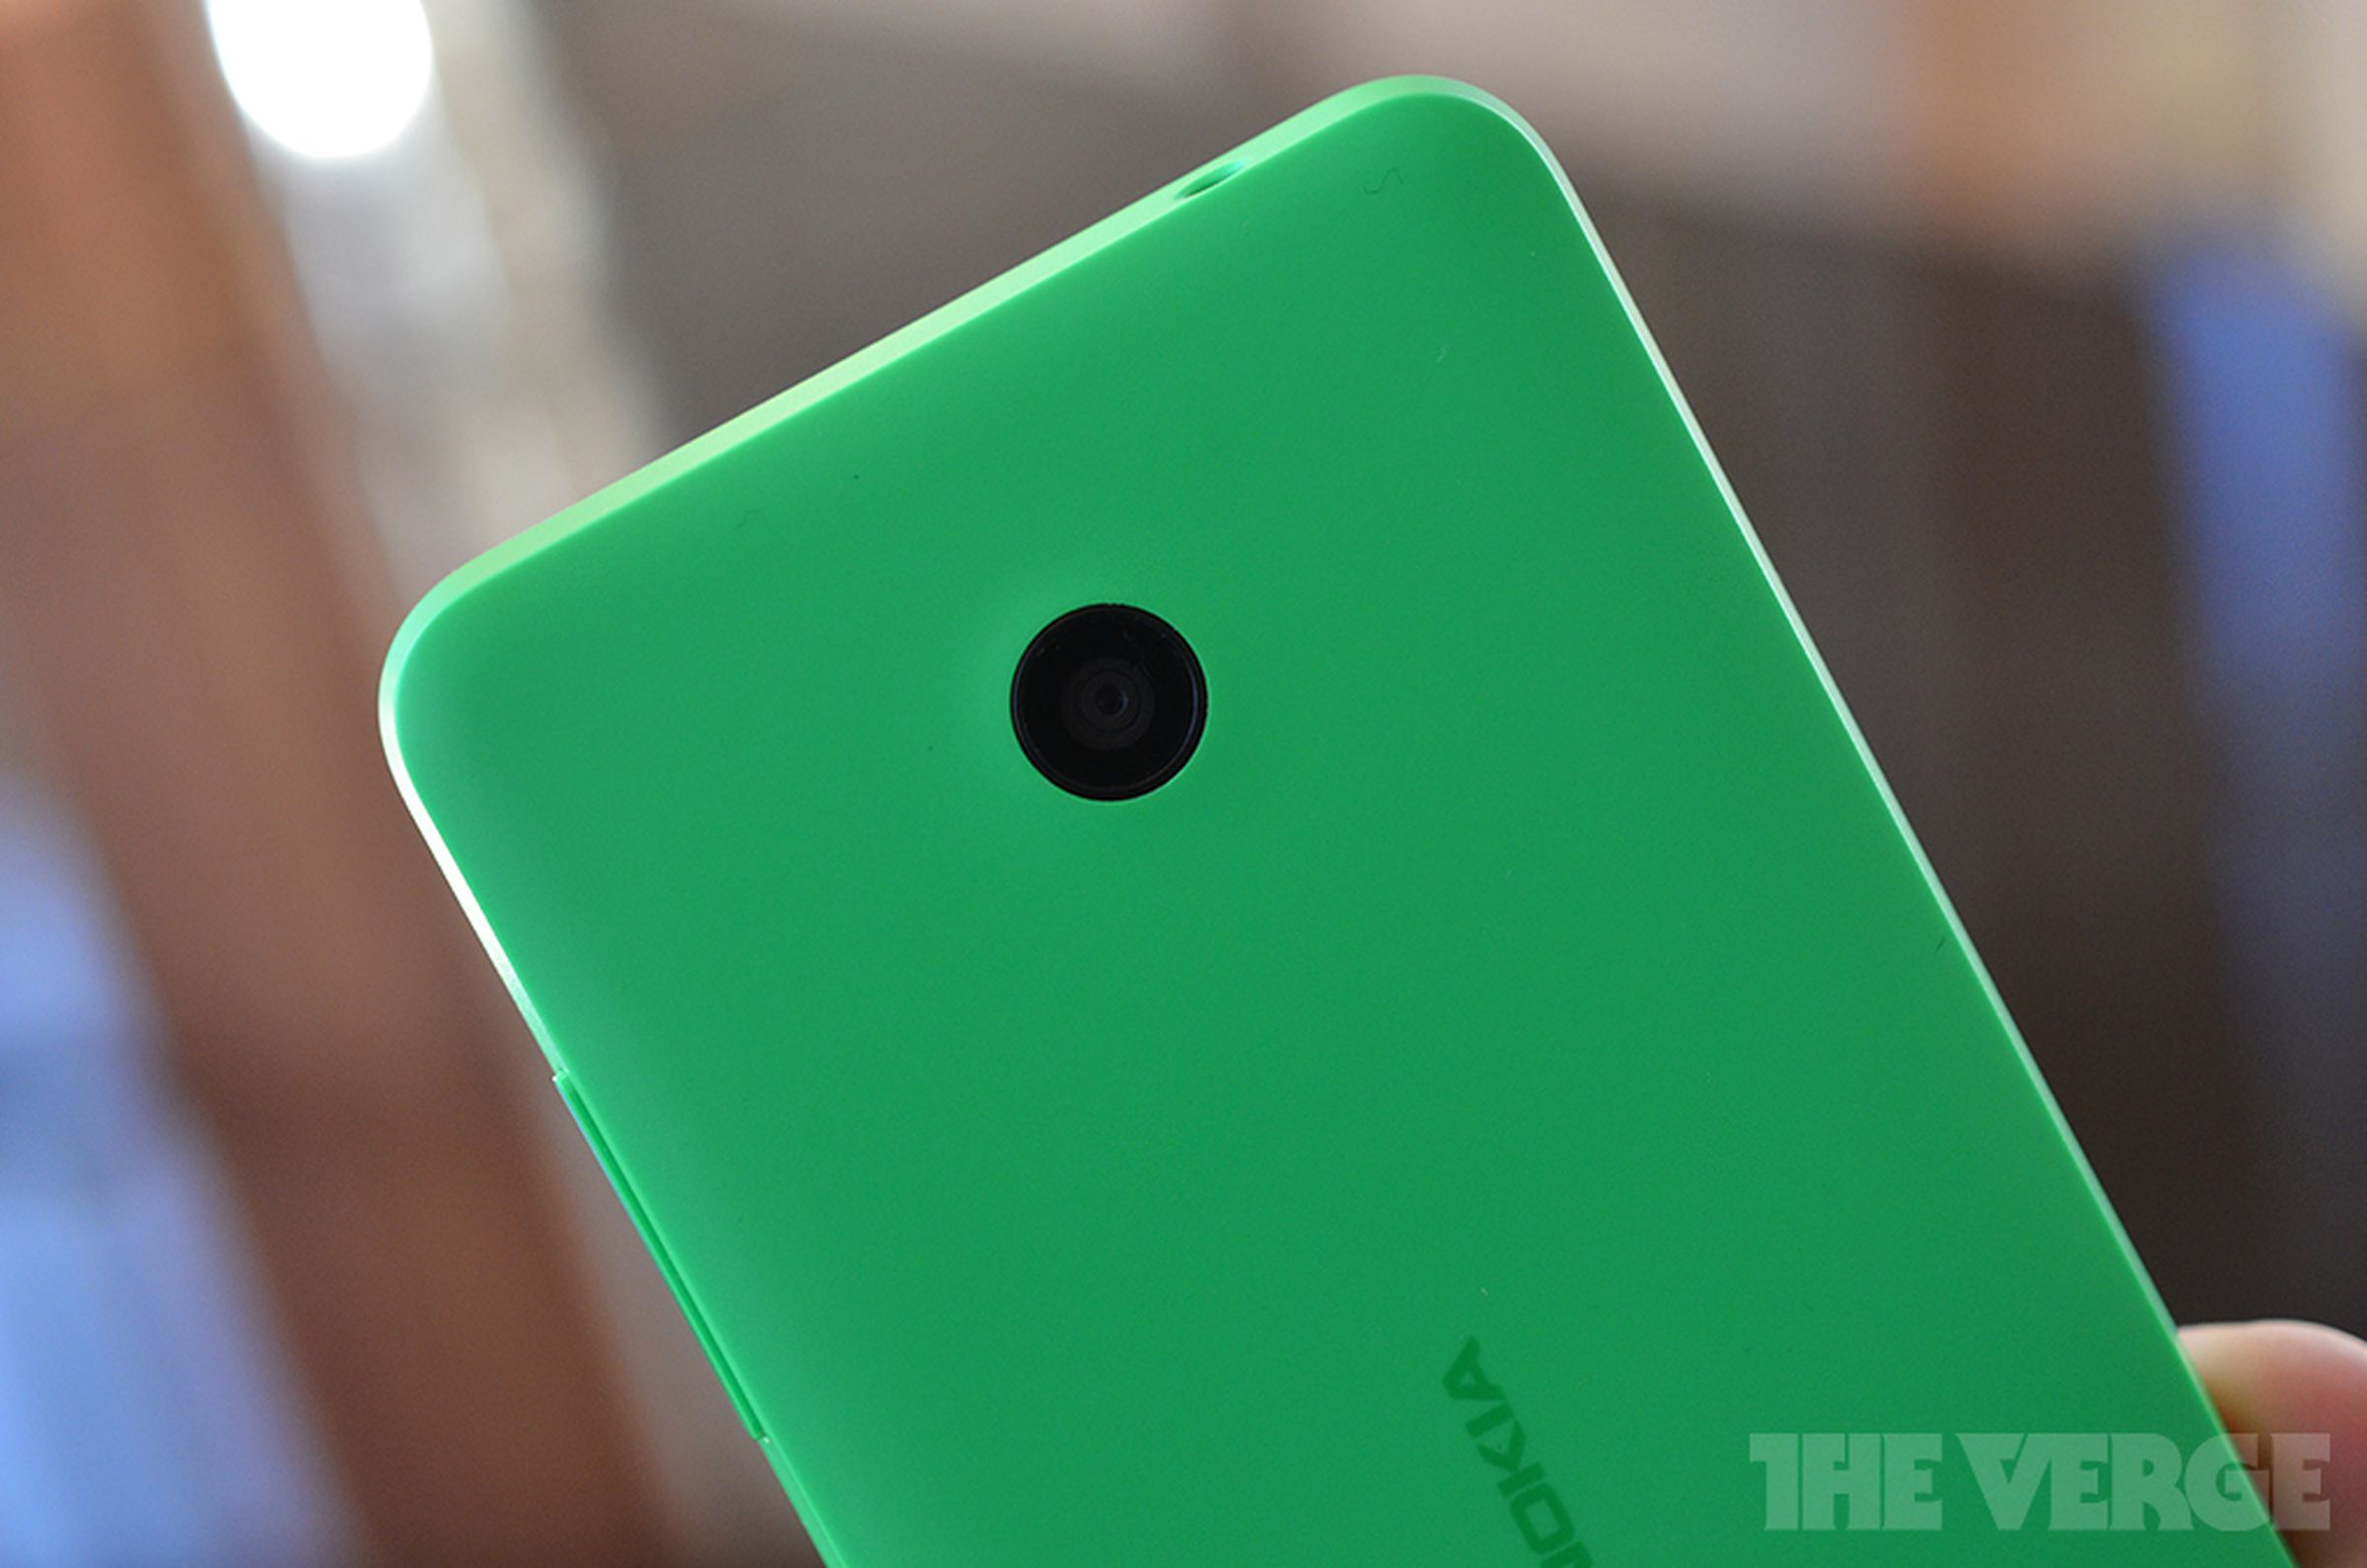 Nokia Lumia 930 and Lumia 630 hands-on photos